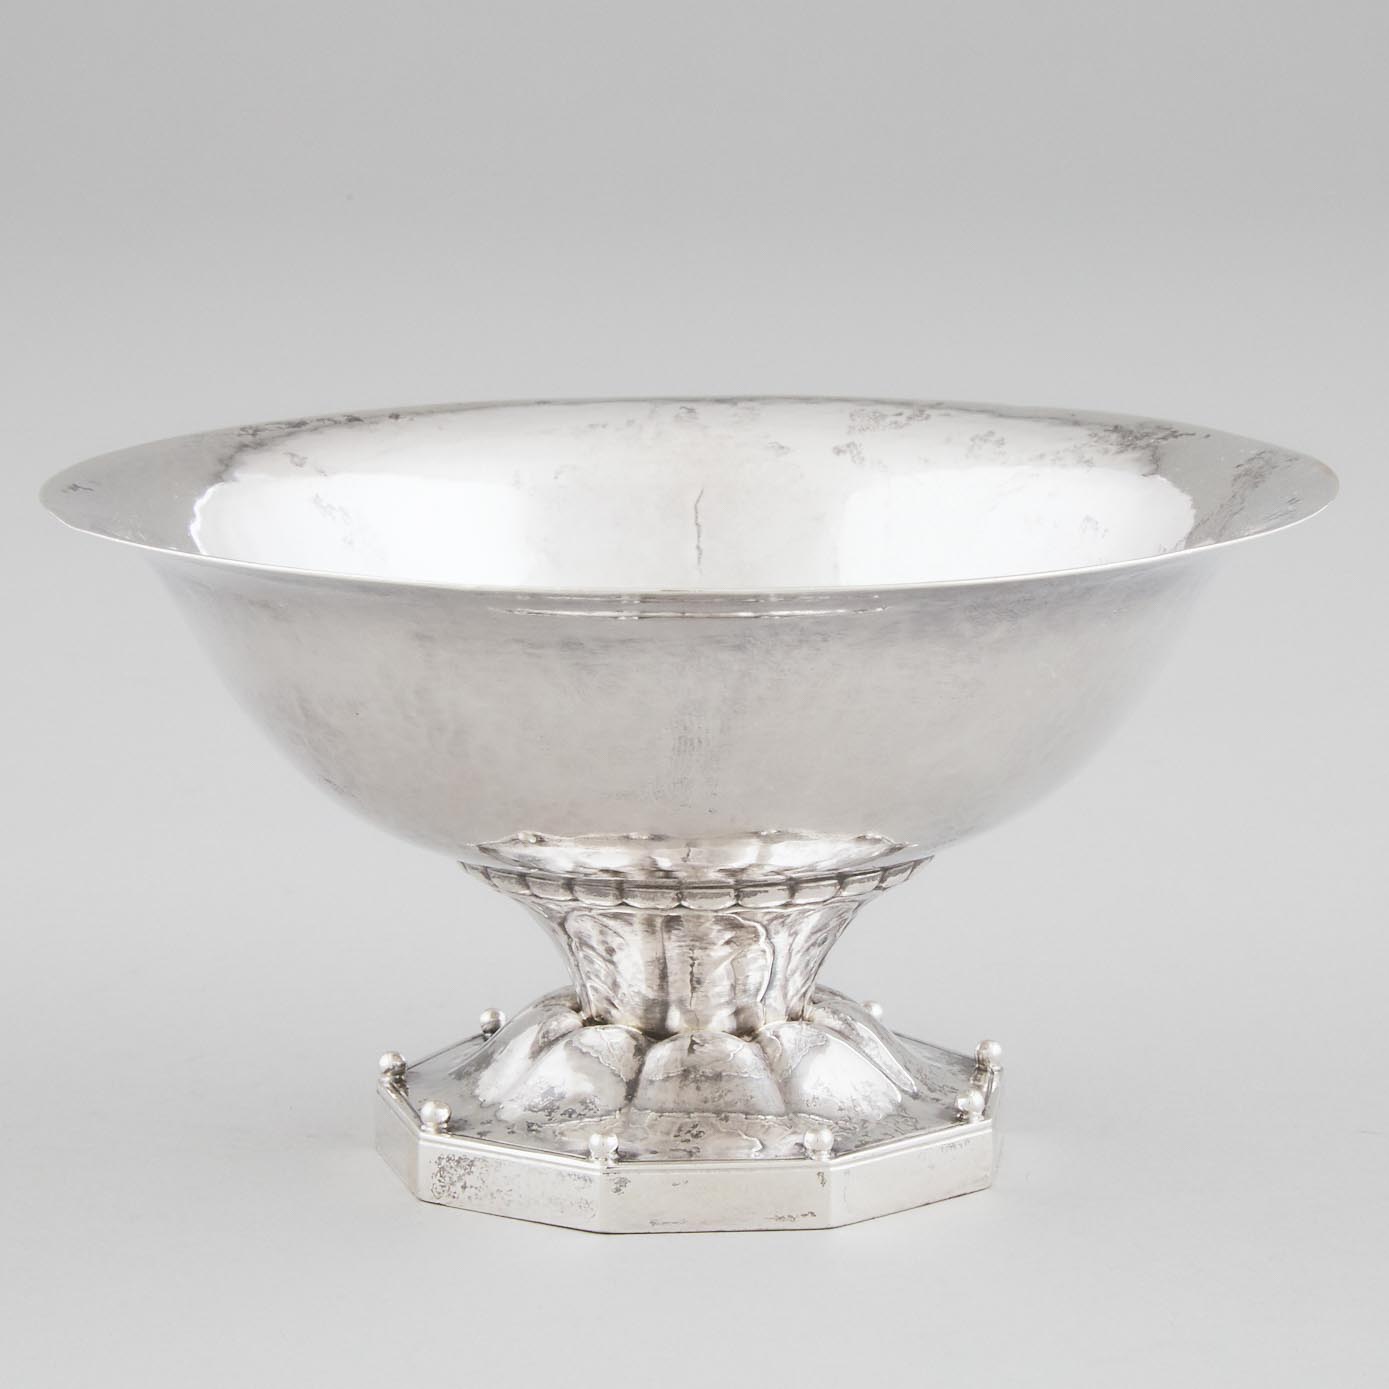 Danish Silver Footed Bowl, #181B,